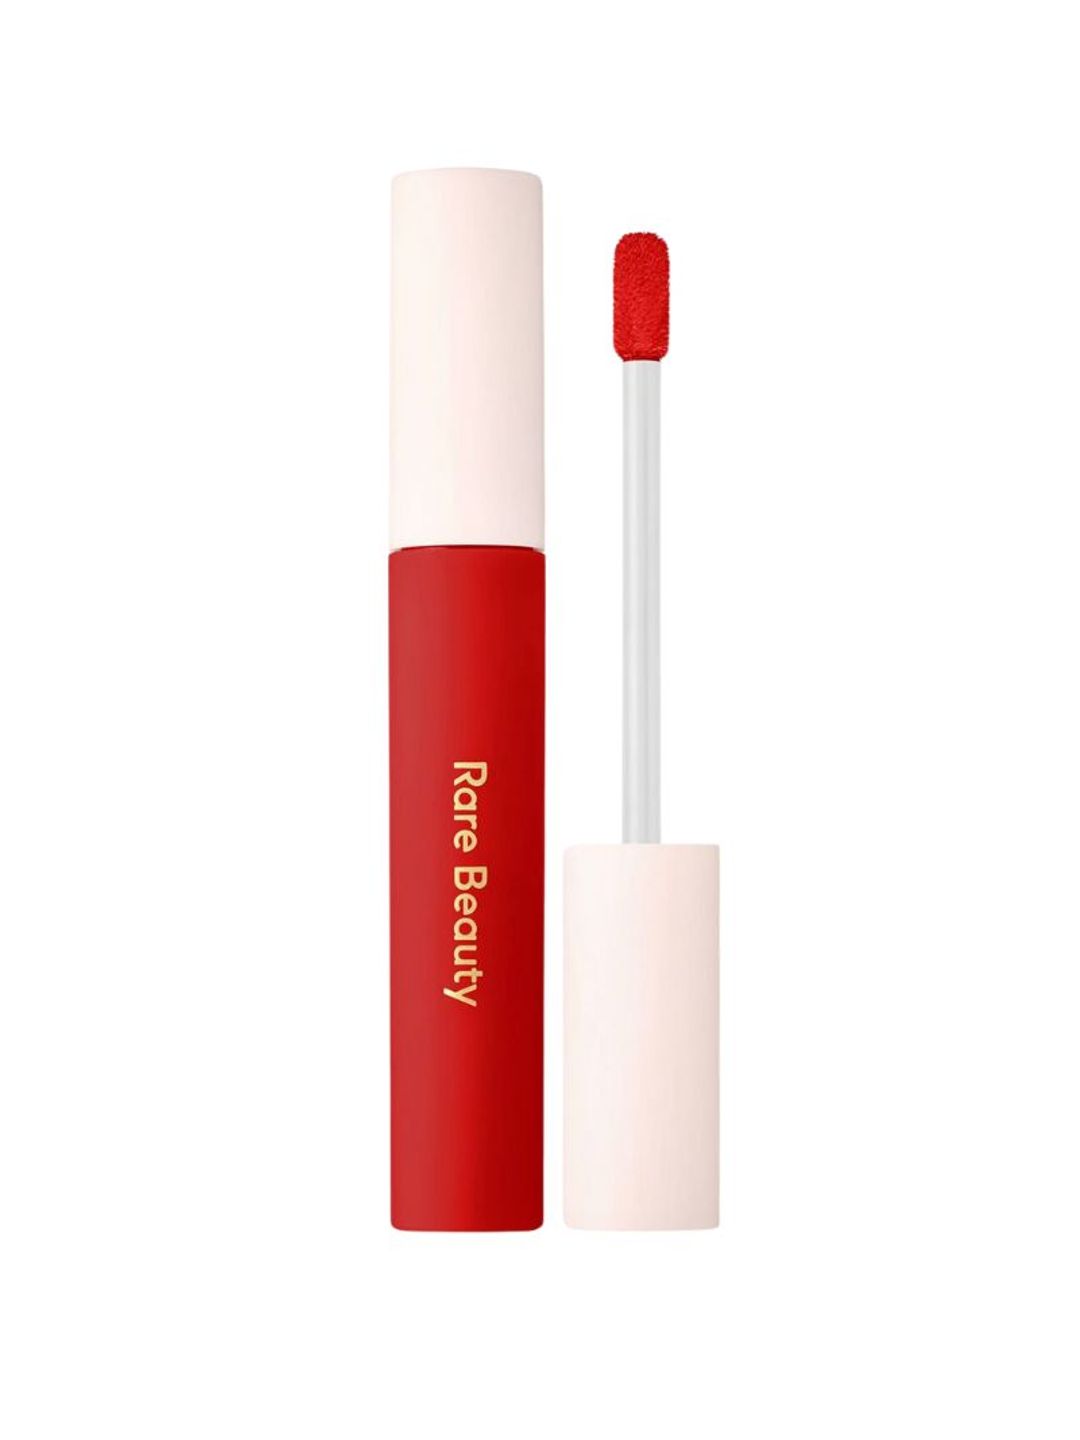 Red lipstick - Rare Beauty 